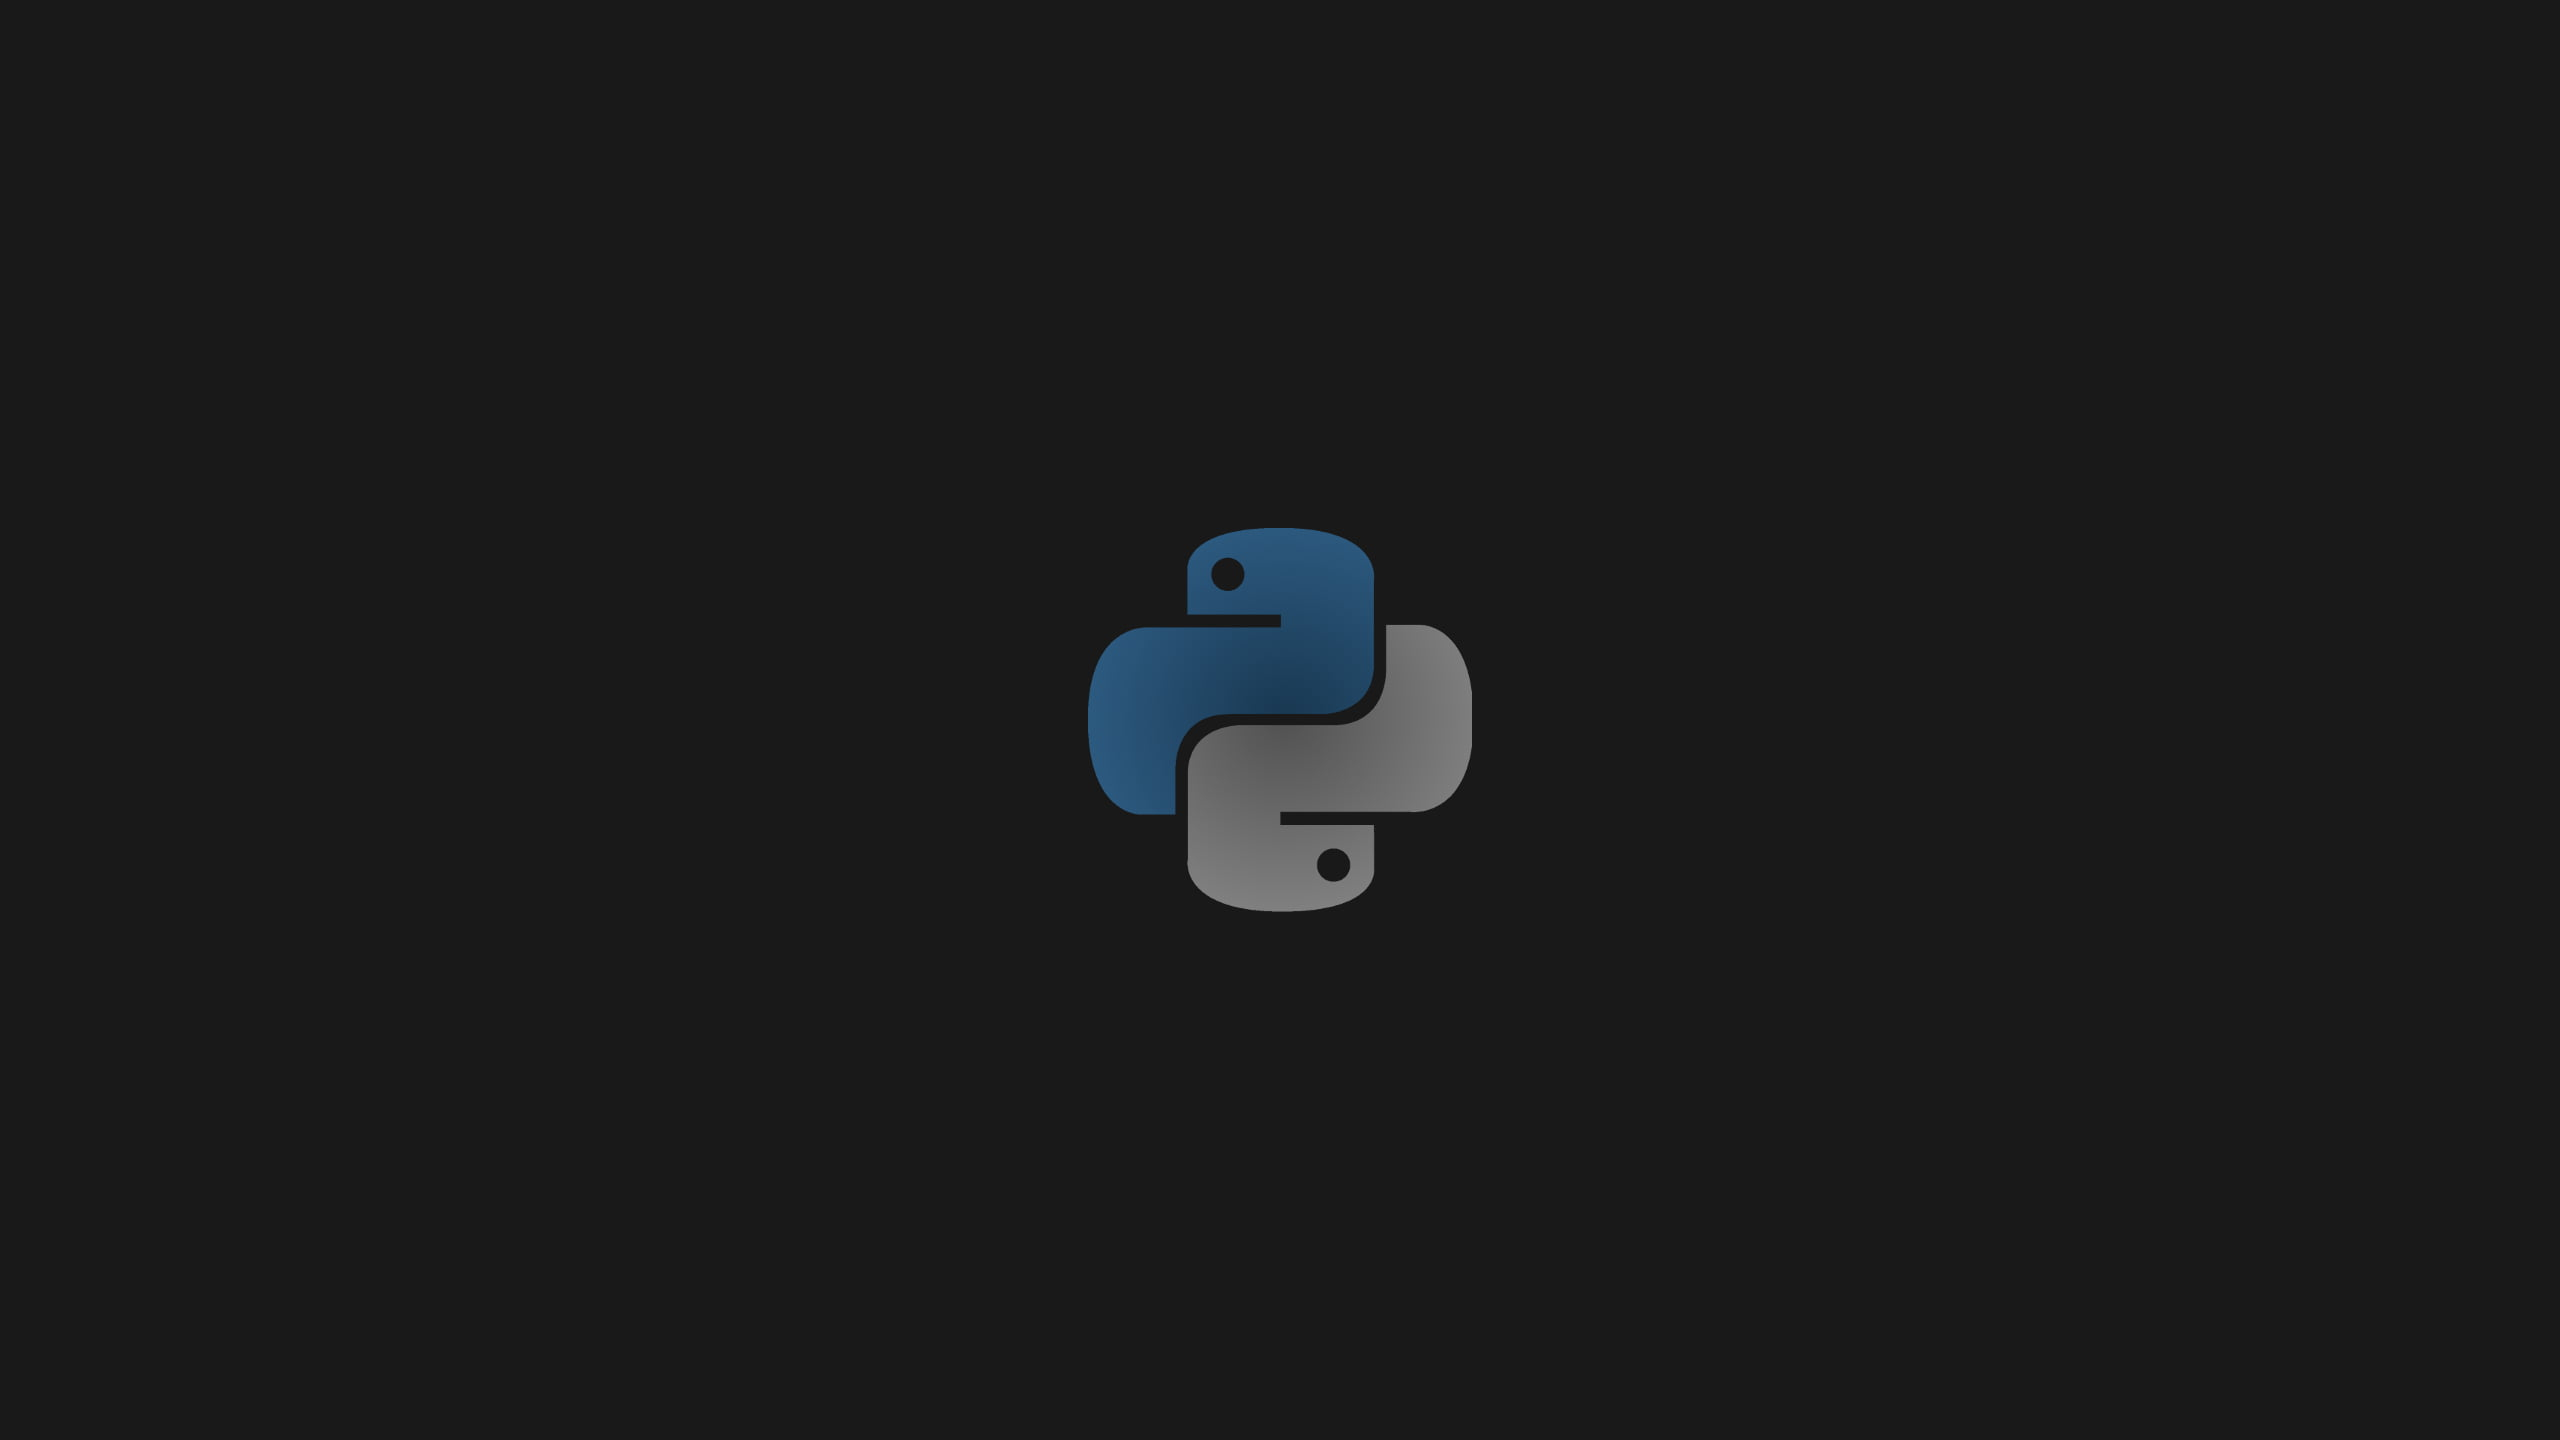 Python Wallpaper, Programming, Minimalism, Grey, Technology - Wallpaperforu